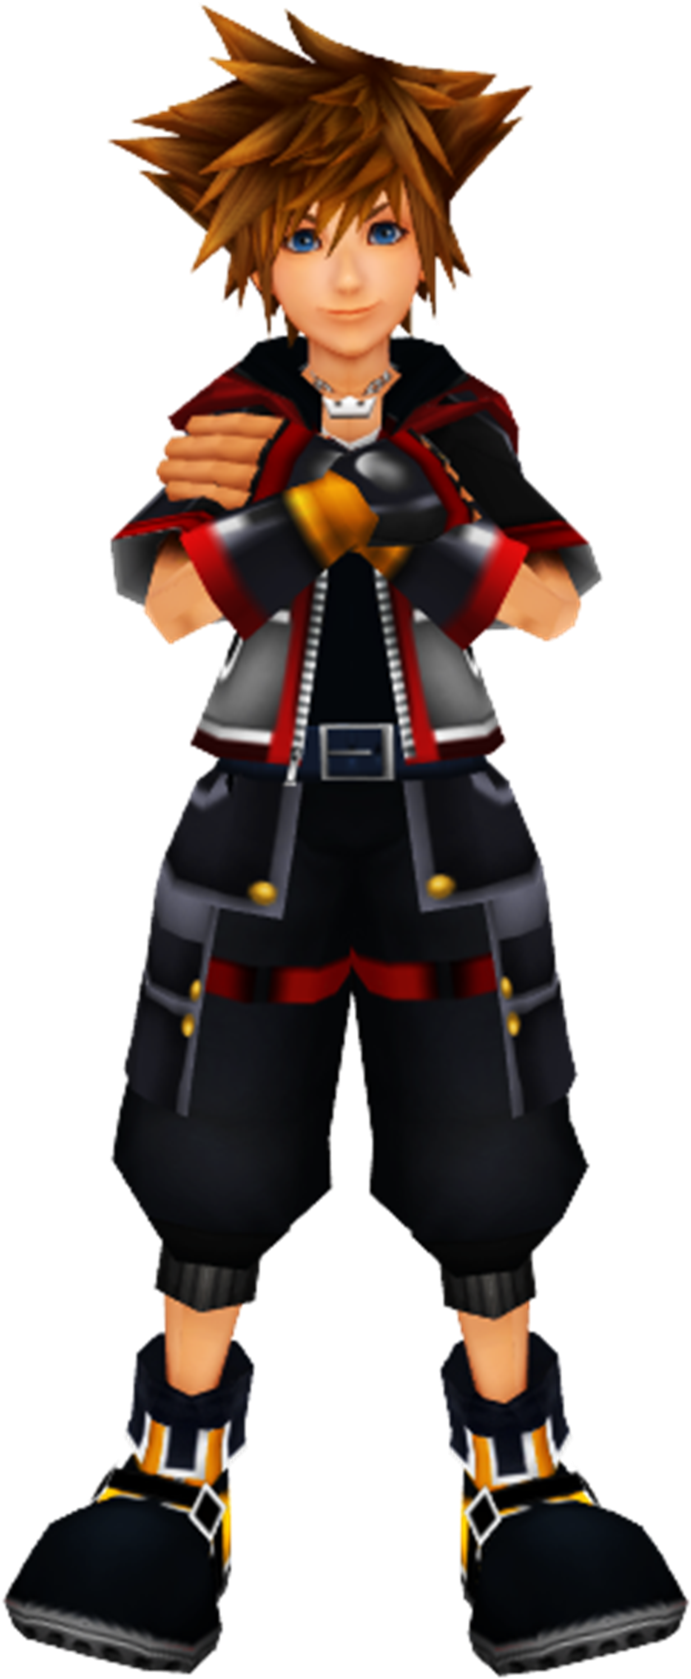 Kingdom Hearts Iii Png Background Image - Kingdom Hearts 3 Main Character (1024x1821), Png Download